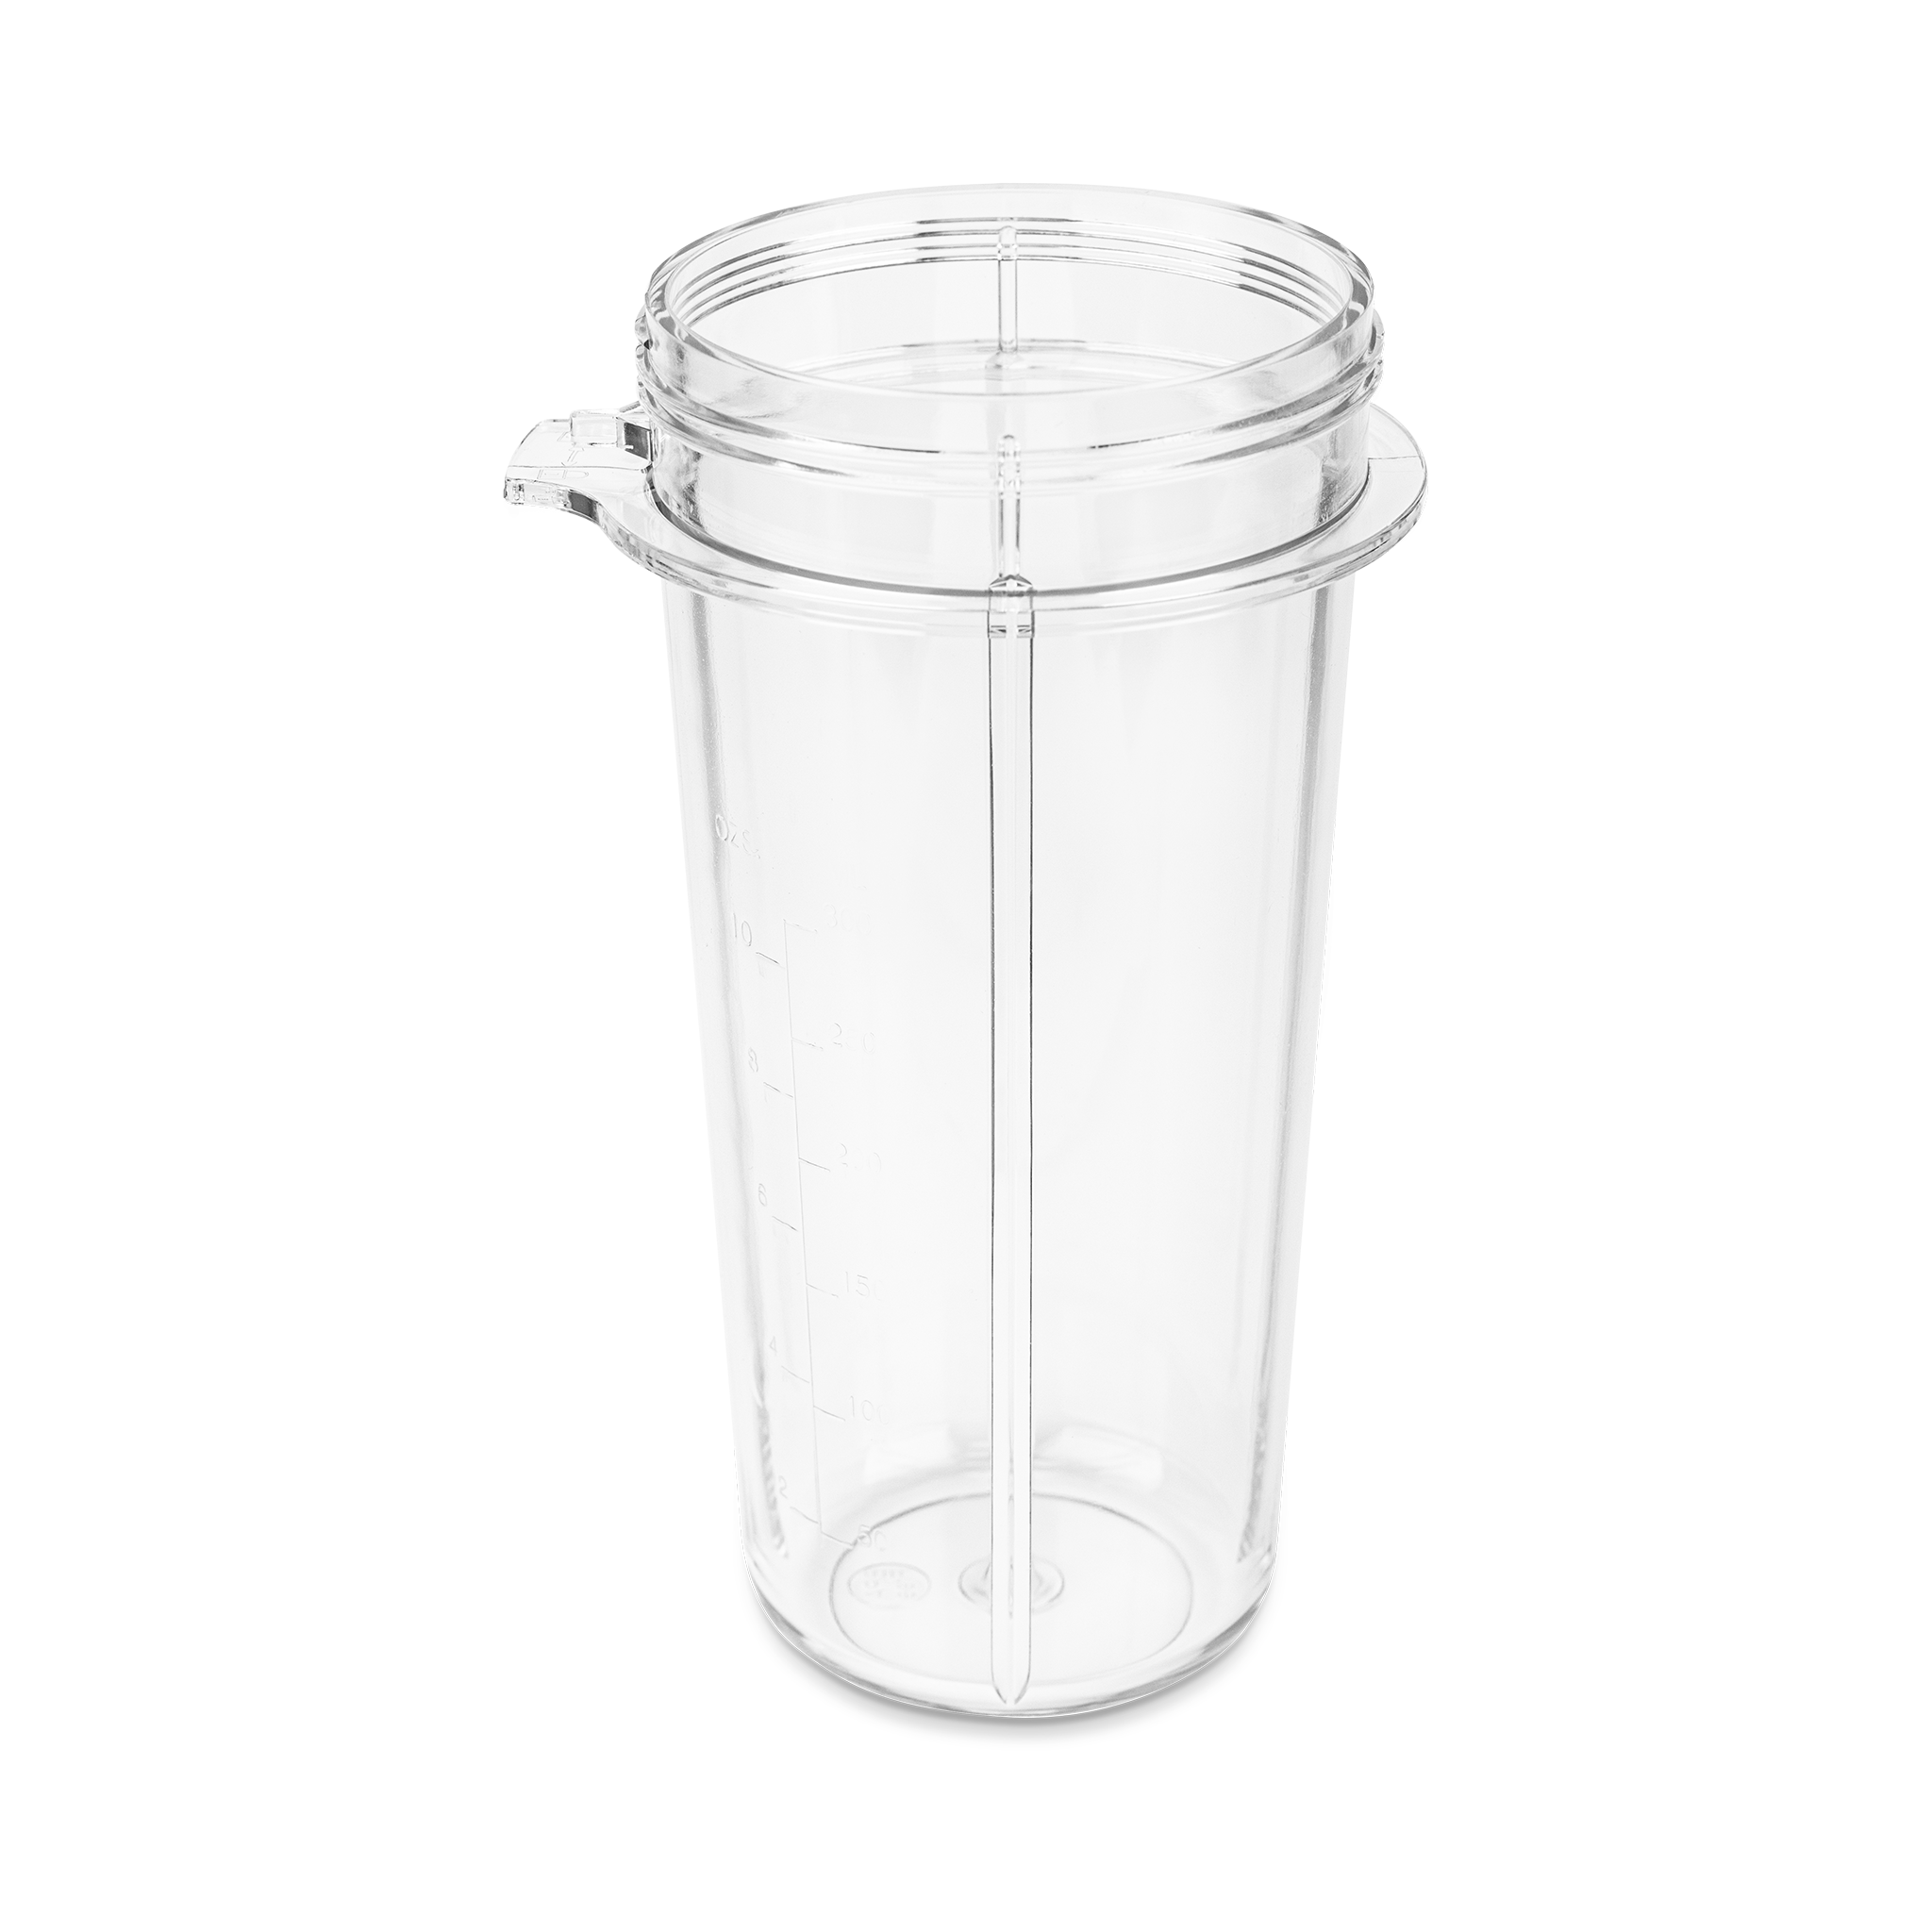 Personal Blender® Original Single-Serving Blender (19-Piece Mason Jar Set  with XL Cups)